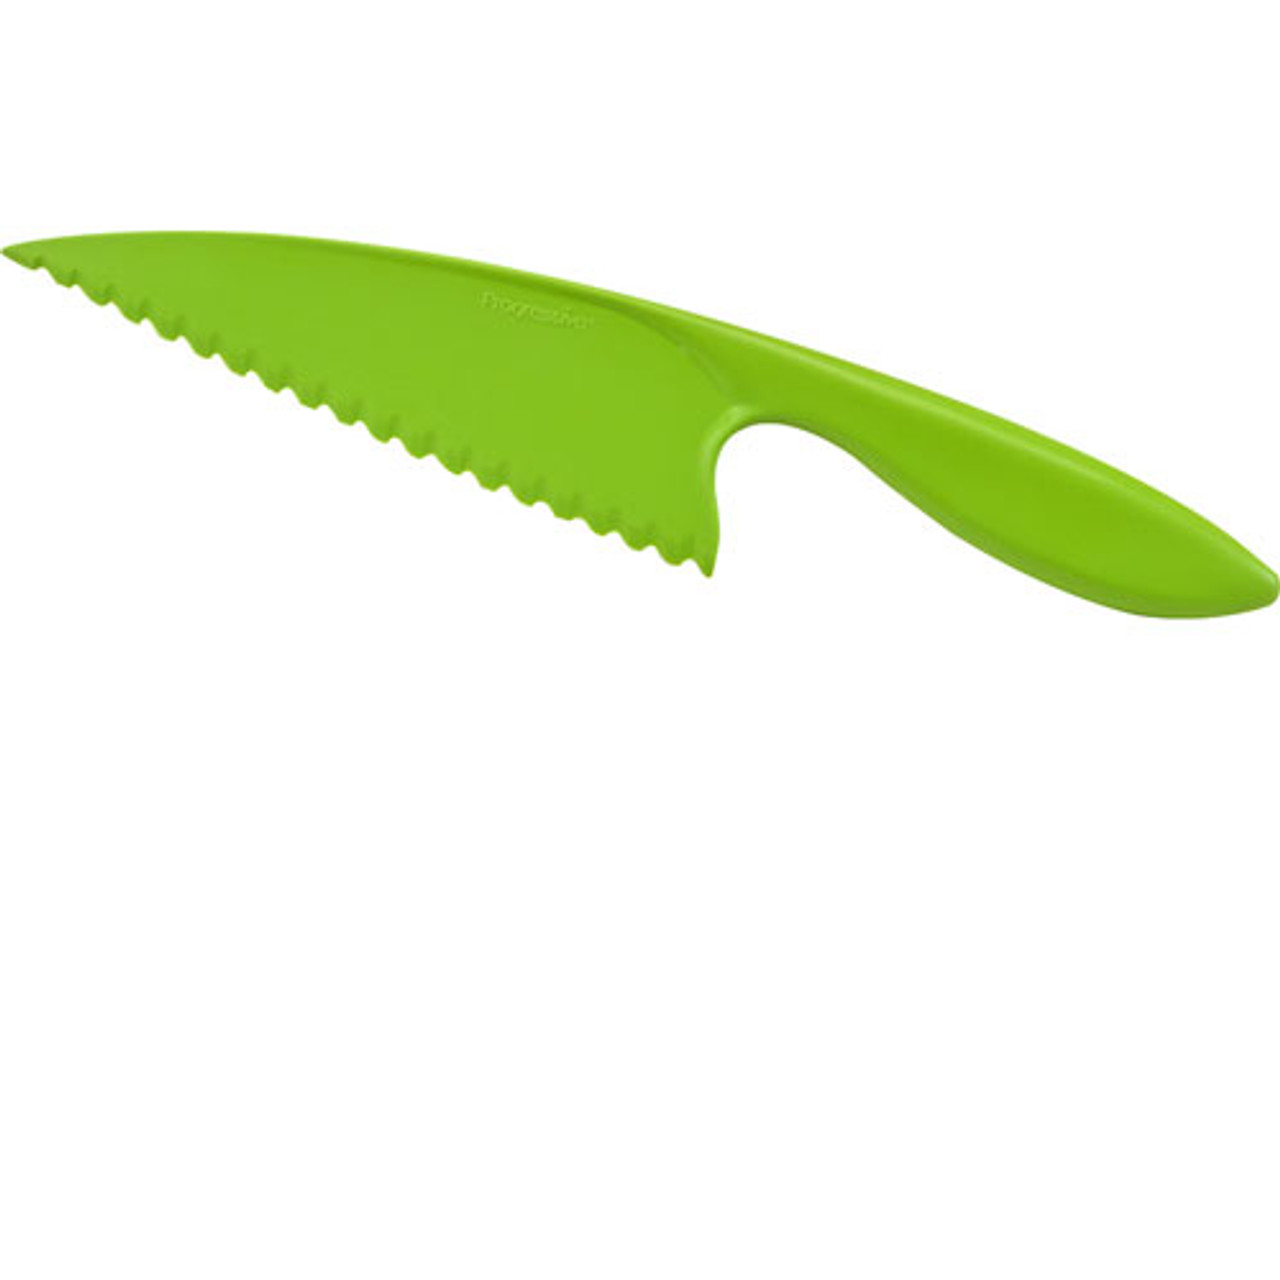 Knife-Green Plastic (Cut Sandwiches) - Replacement Part For San Jamar SJLK200W